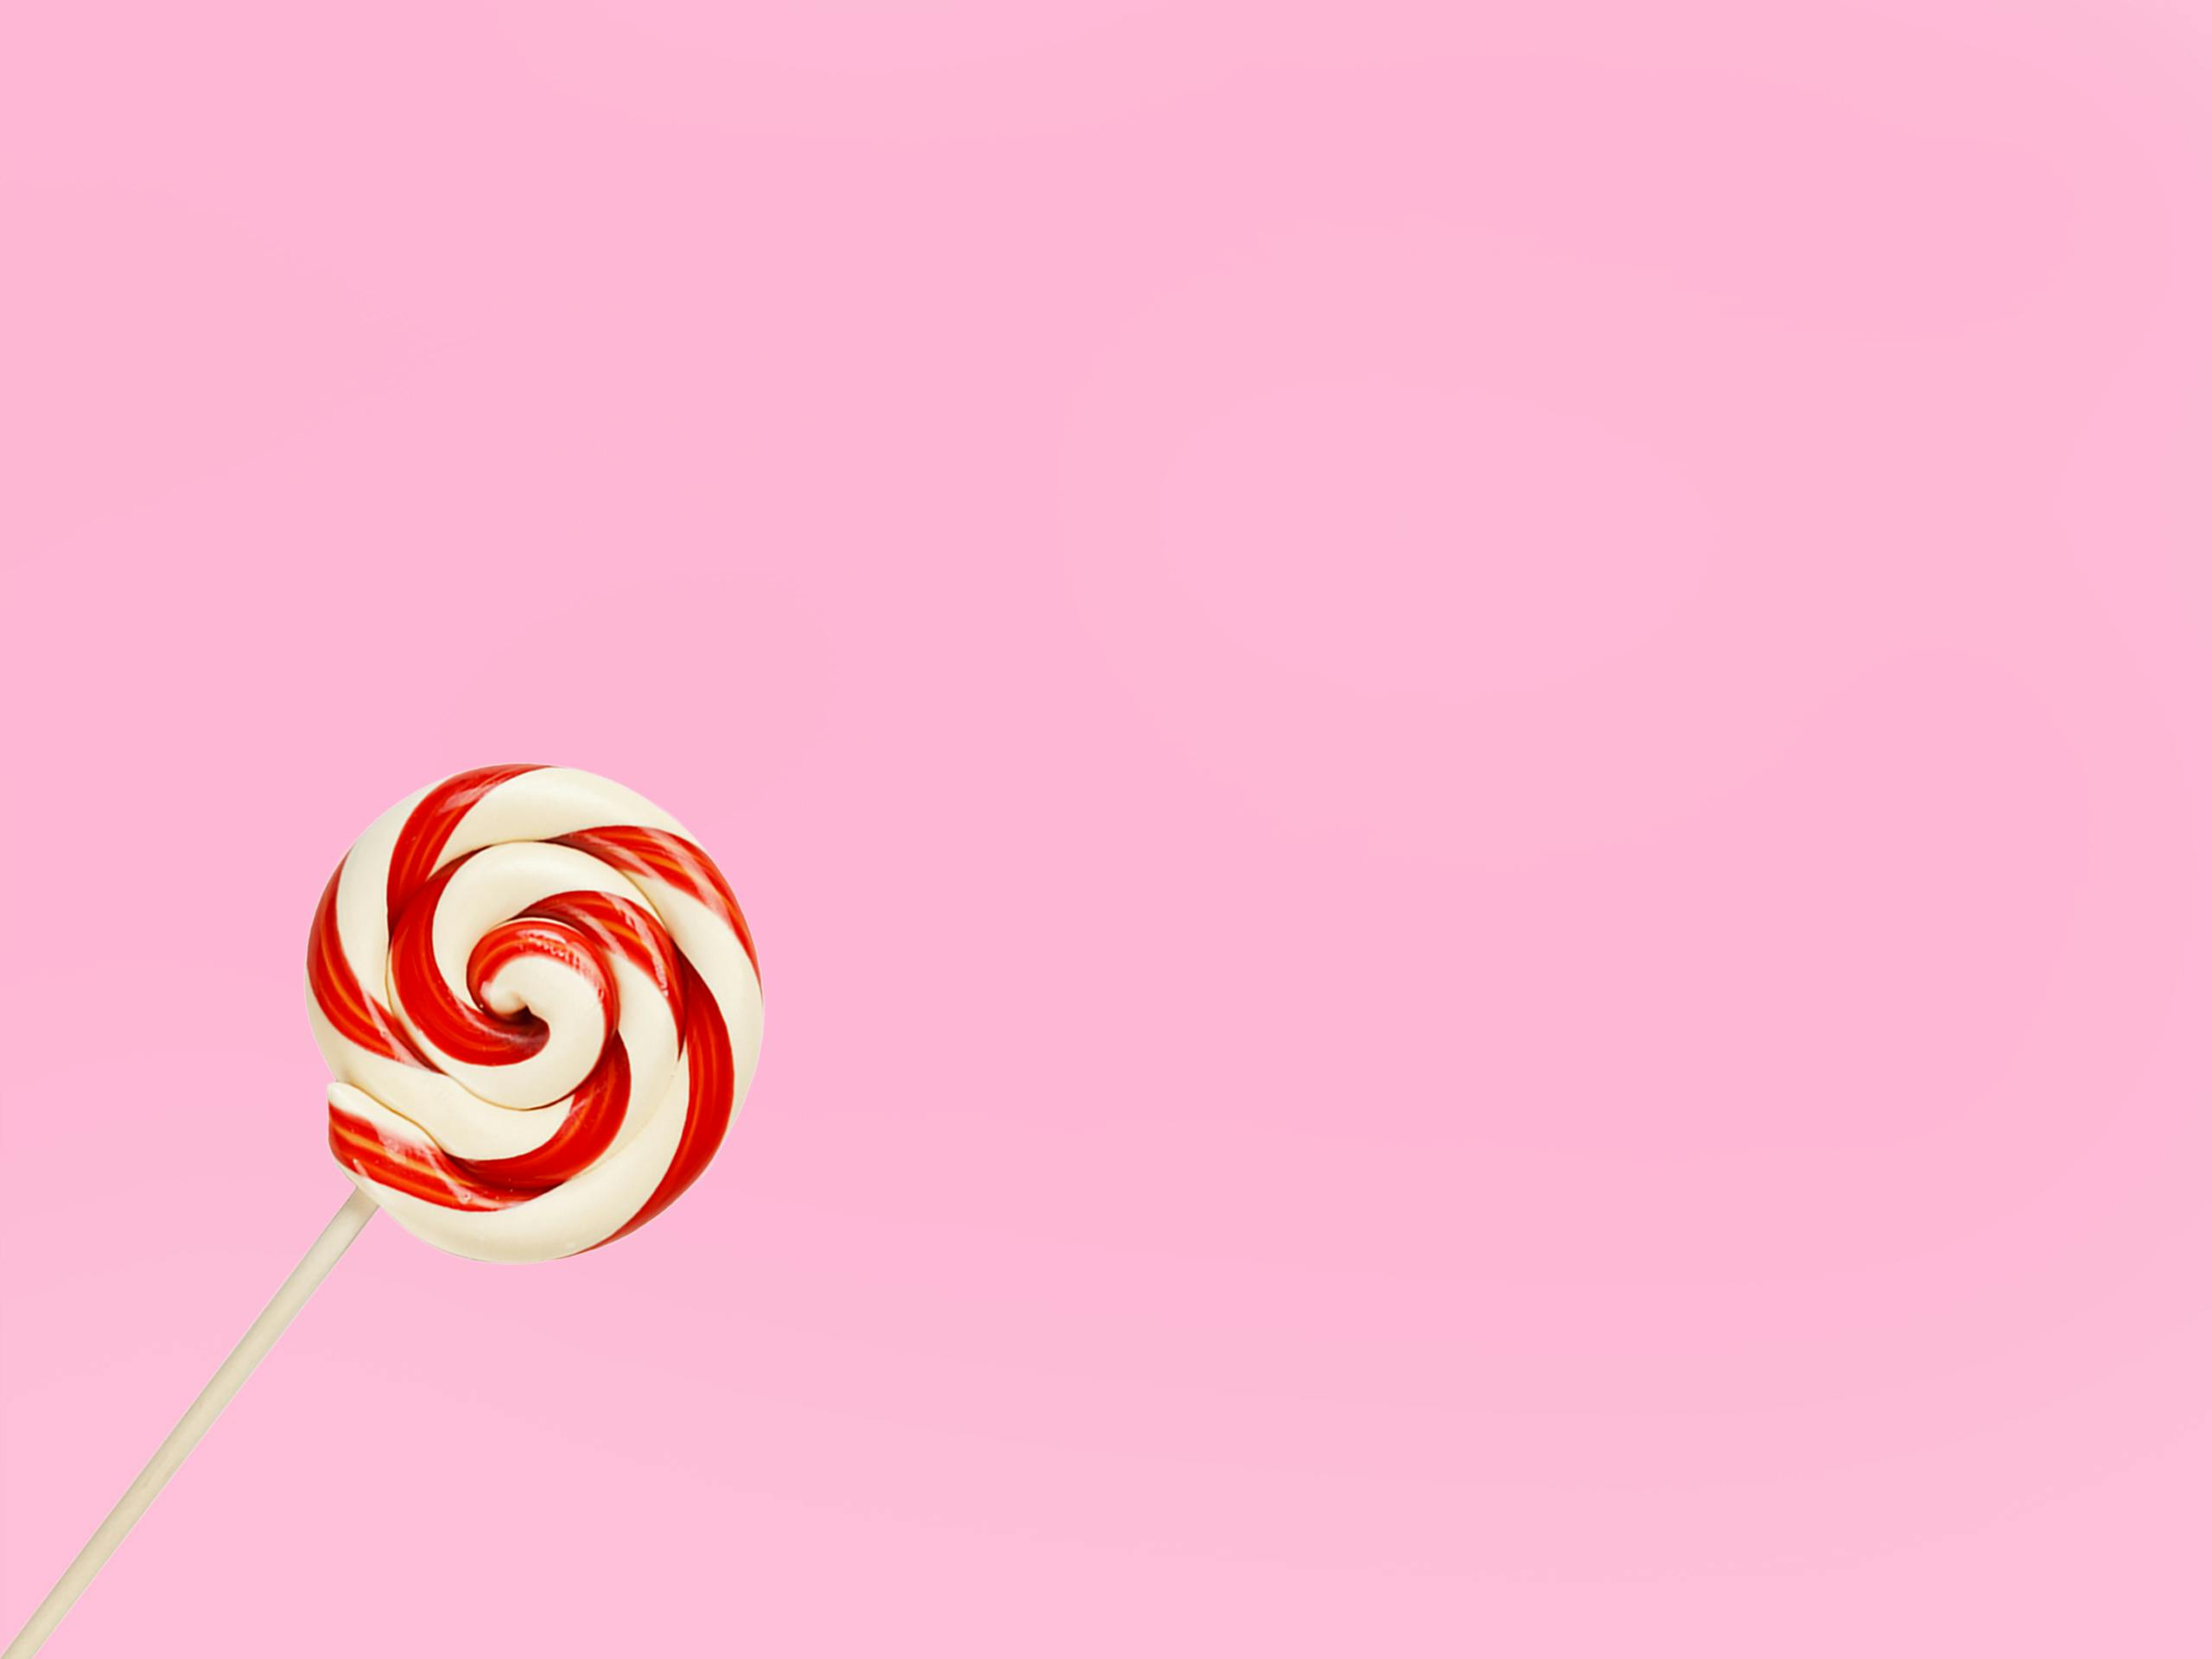 Wallpaper ID 369425  Food Candy Phone Wallpaper Lollipop Still Life  1080x2280 free download